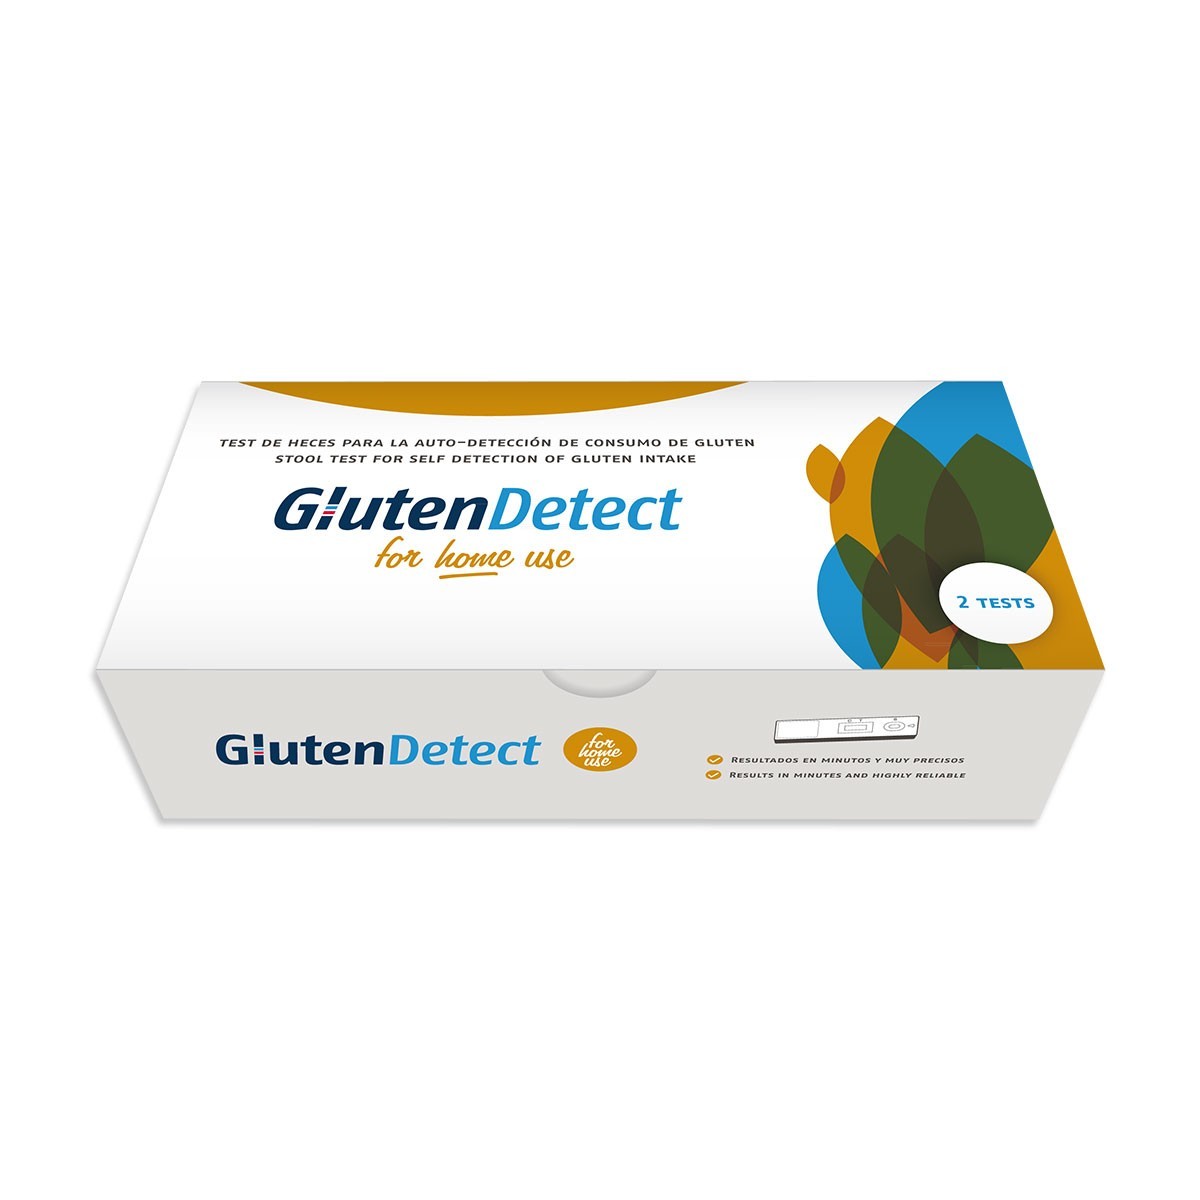 GlutenDetect Stool Test